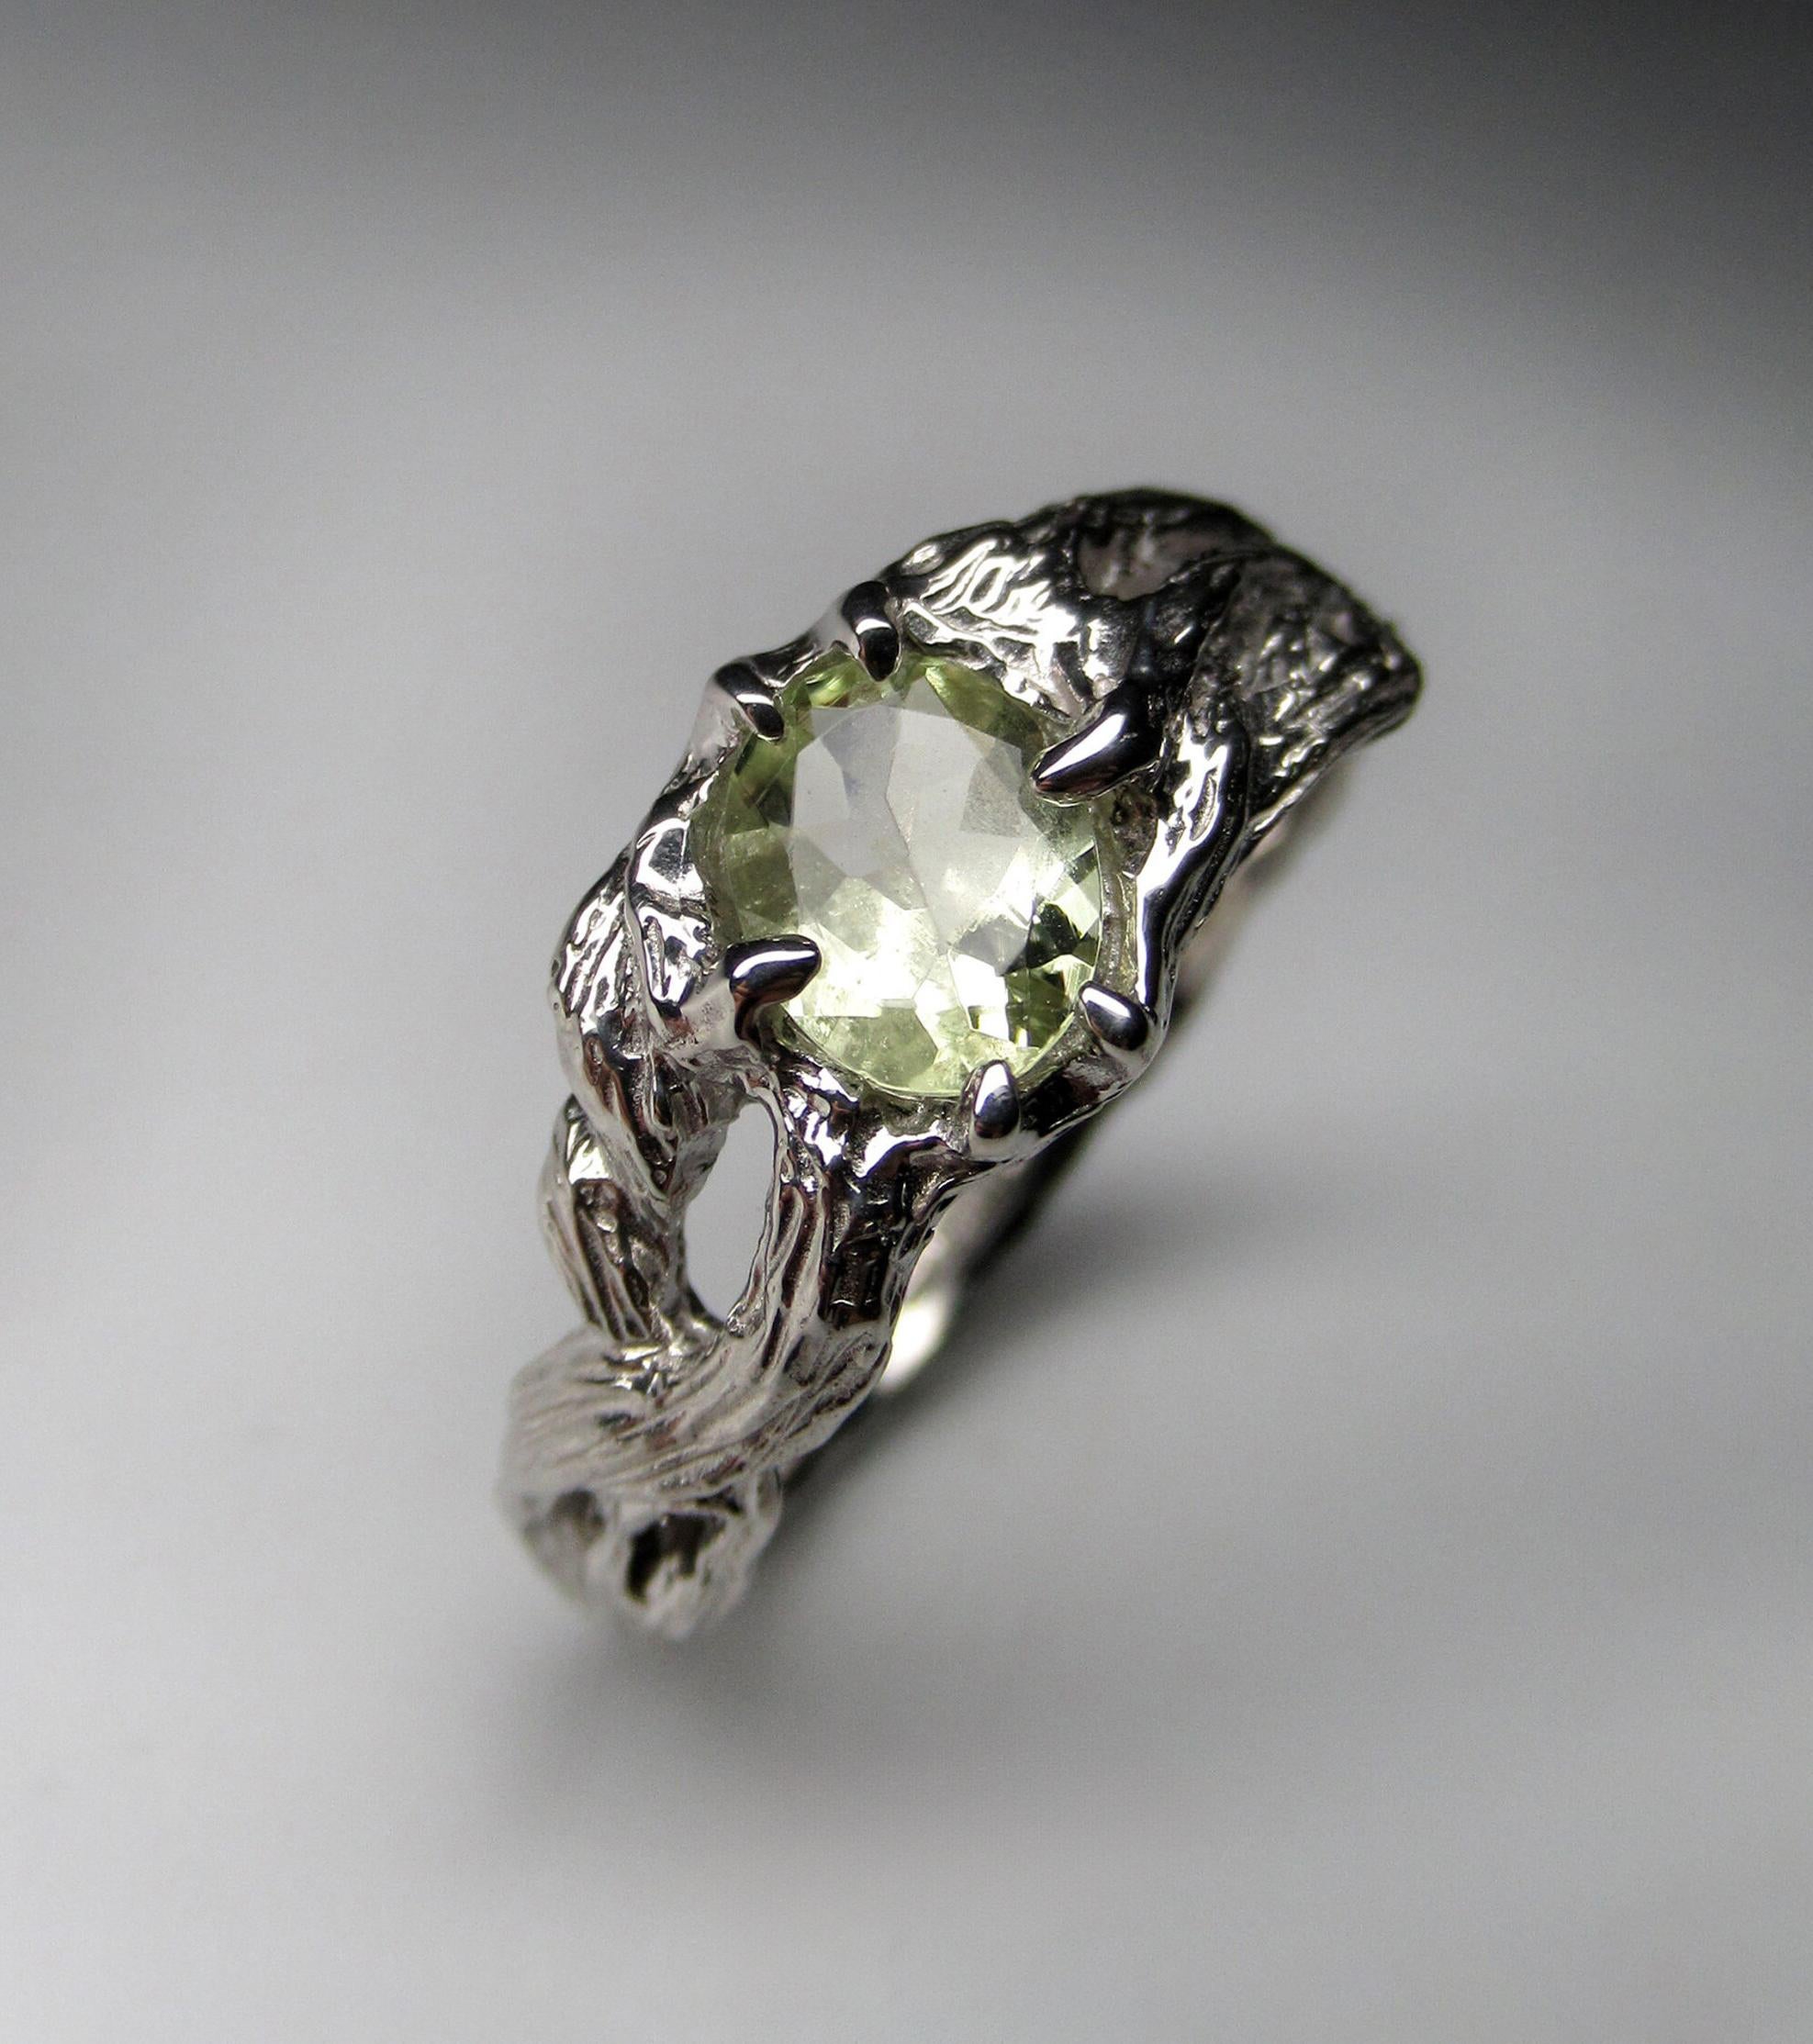 Silver ring with natural Heliodor Yellow Beryl  
gemstone origin - Brazil
gem size is 0.12 x 0.2 x 0.28 in / 3 x 5 x 7 mm
heliodor weight - 0.55 carat
ring size - 8 US
ring weight - 2.98 grams